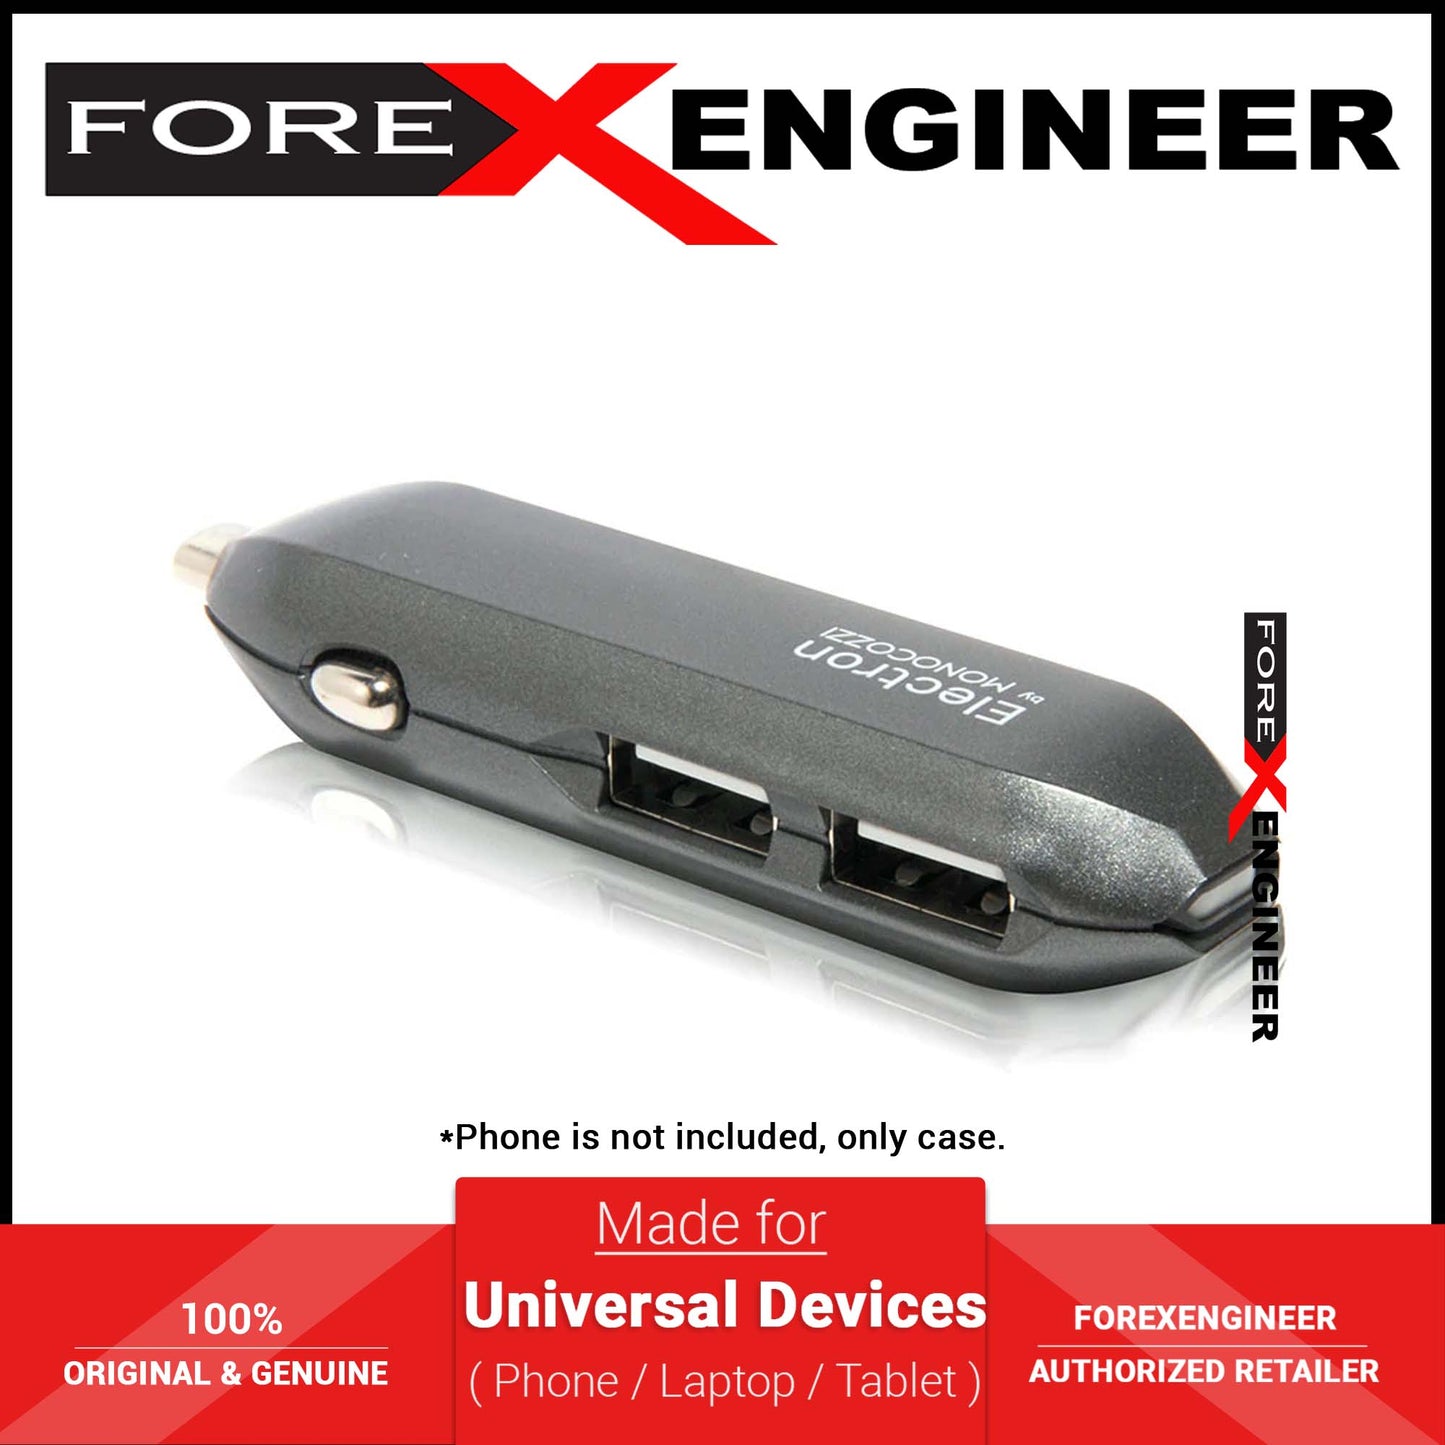 Monocozzi Automotive ORE 4.8A Dual USB Car Charger - Charcoal (Barcode: 4897021599967 )